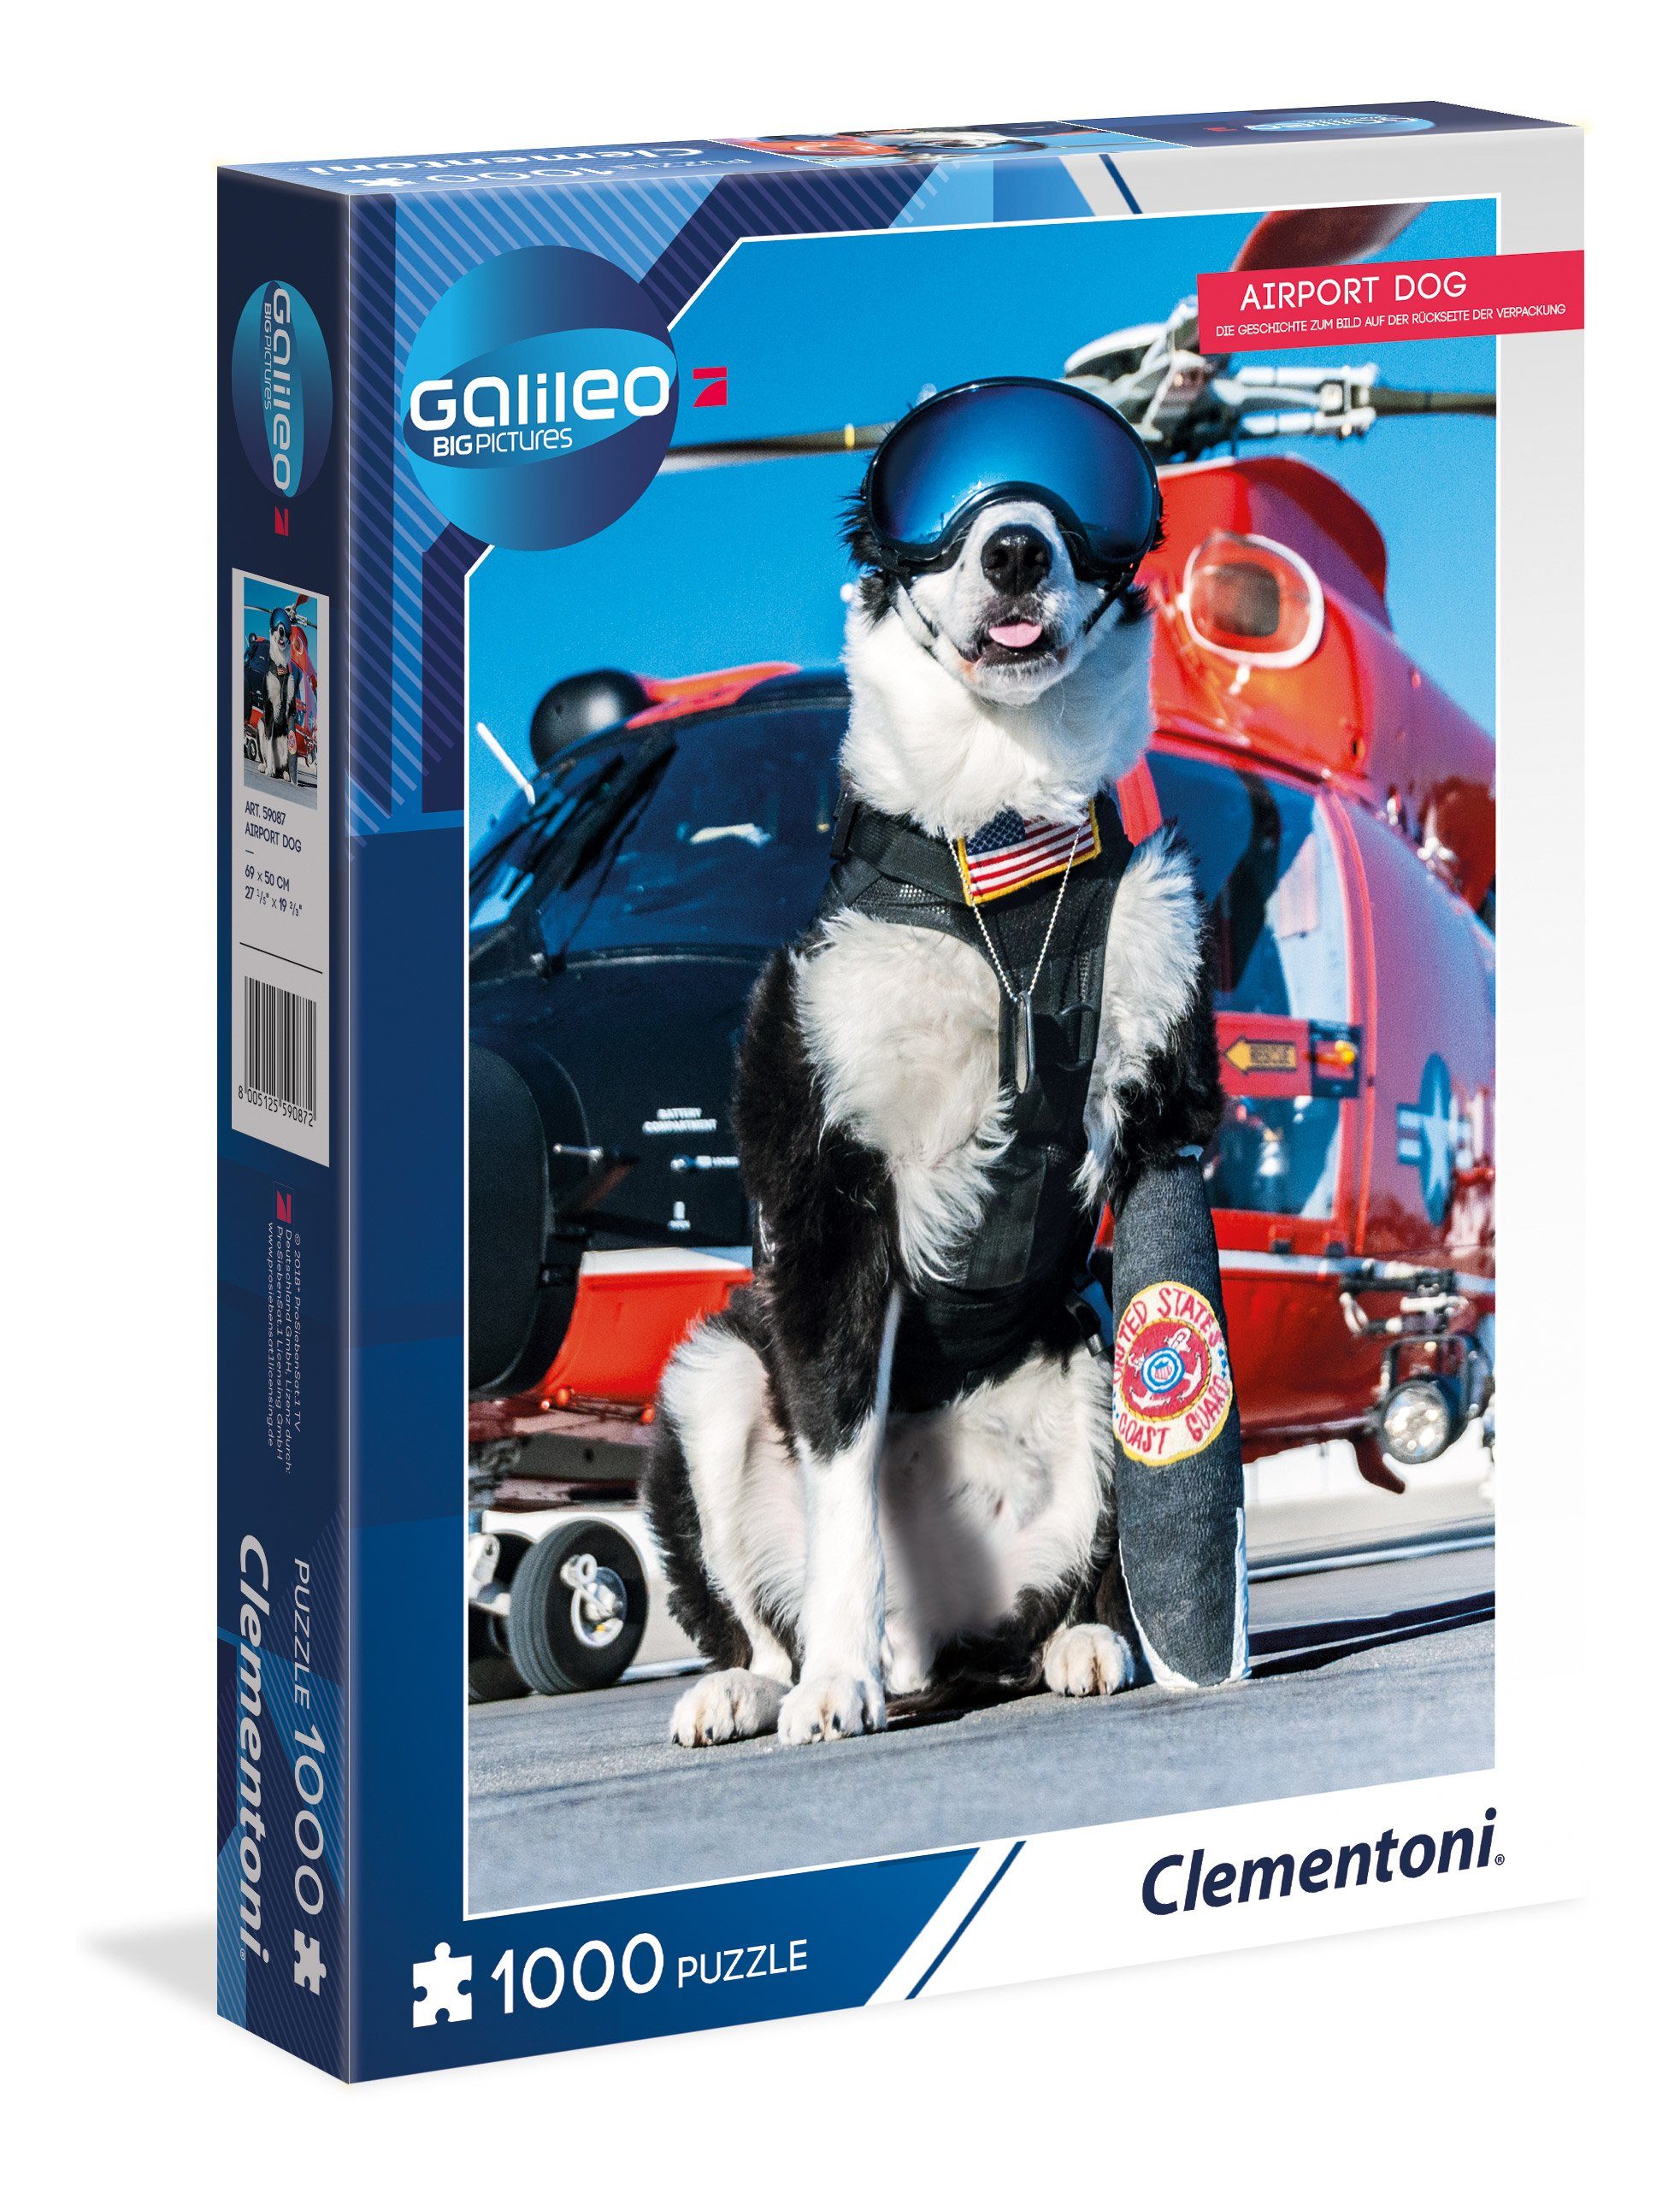 Clementoni® Puzzle 59087 Galileo Airport Dog 1000 Teile Puzzle, 1000 Puzzleteile